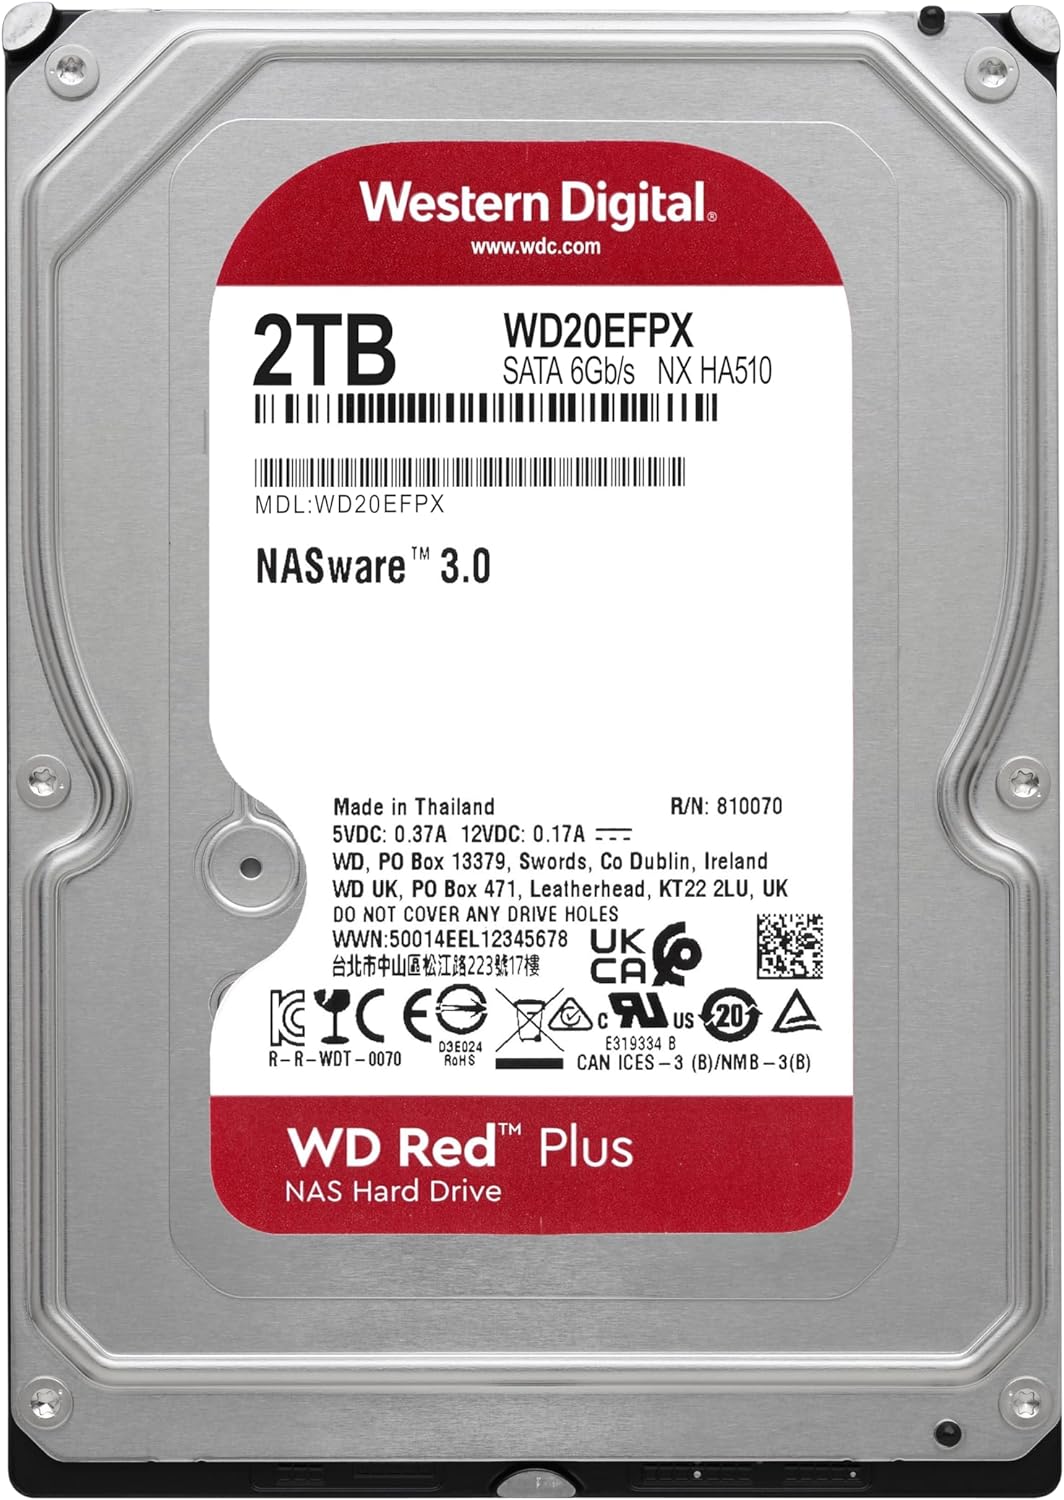 WD Red Plus 2TB NAS Hard Drive - 5400 RPM Class SATA 6Gb/s, CMR, 128MB Cache, 3.5 Inch - WD20EFPX